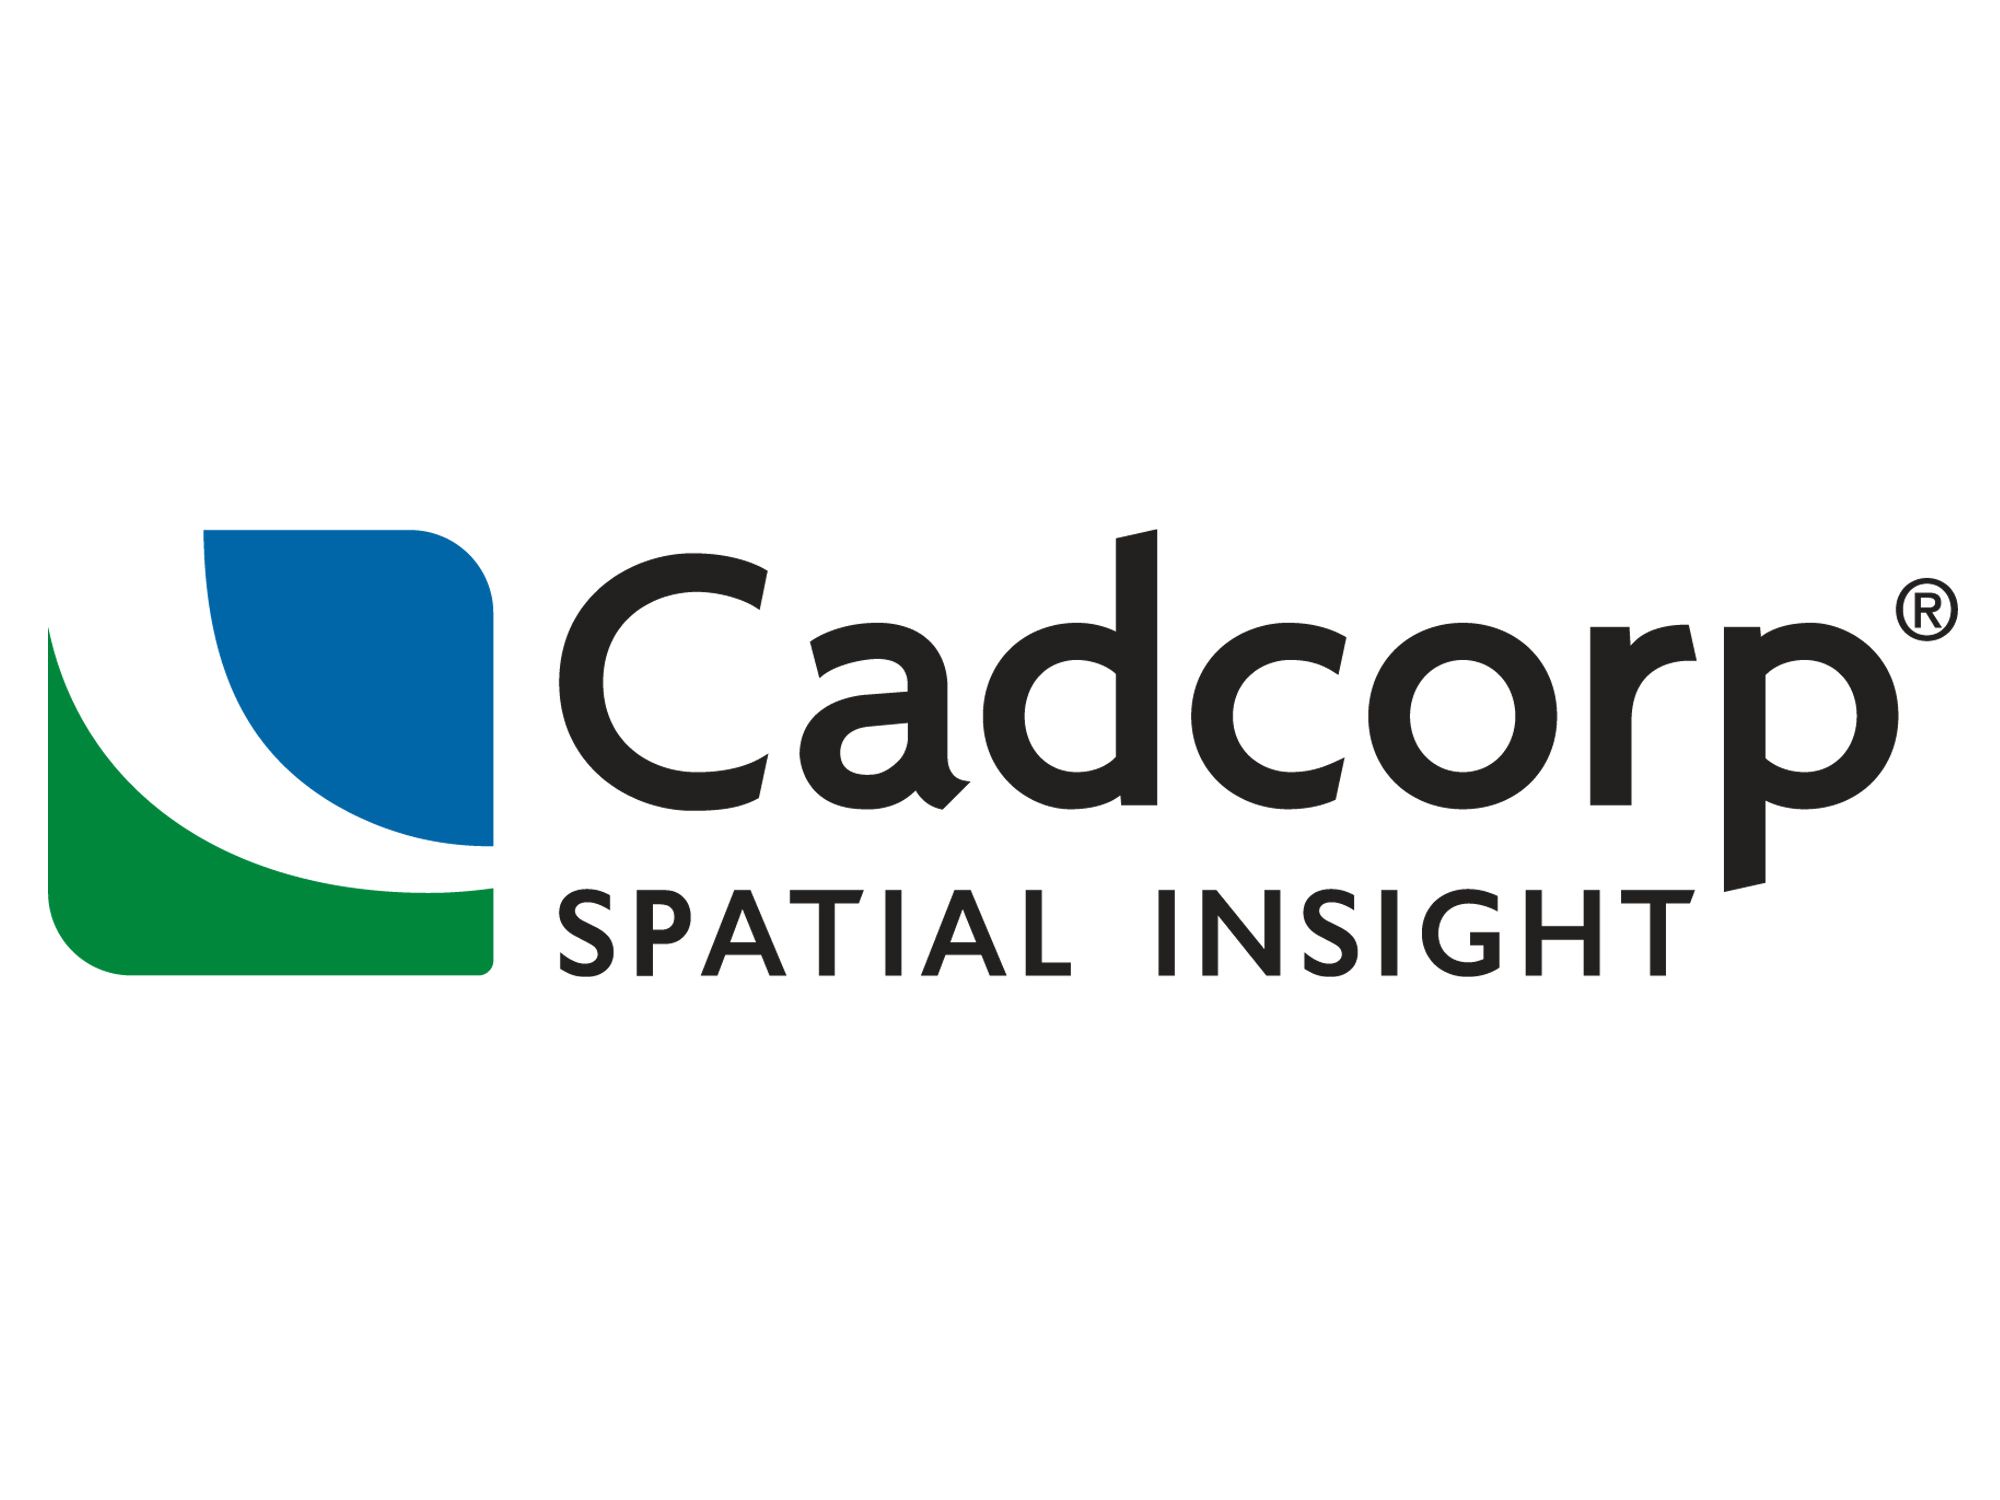 Cadcorp Logo